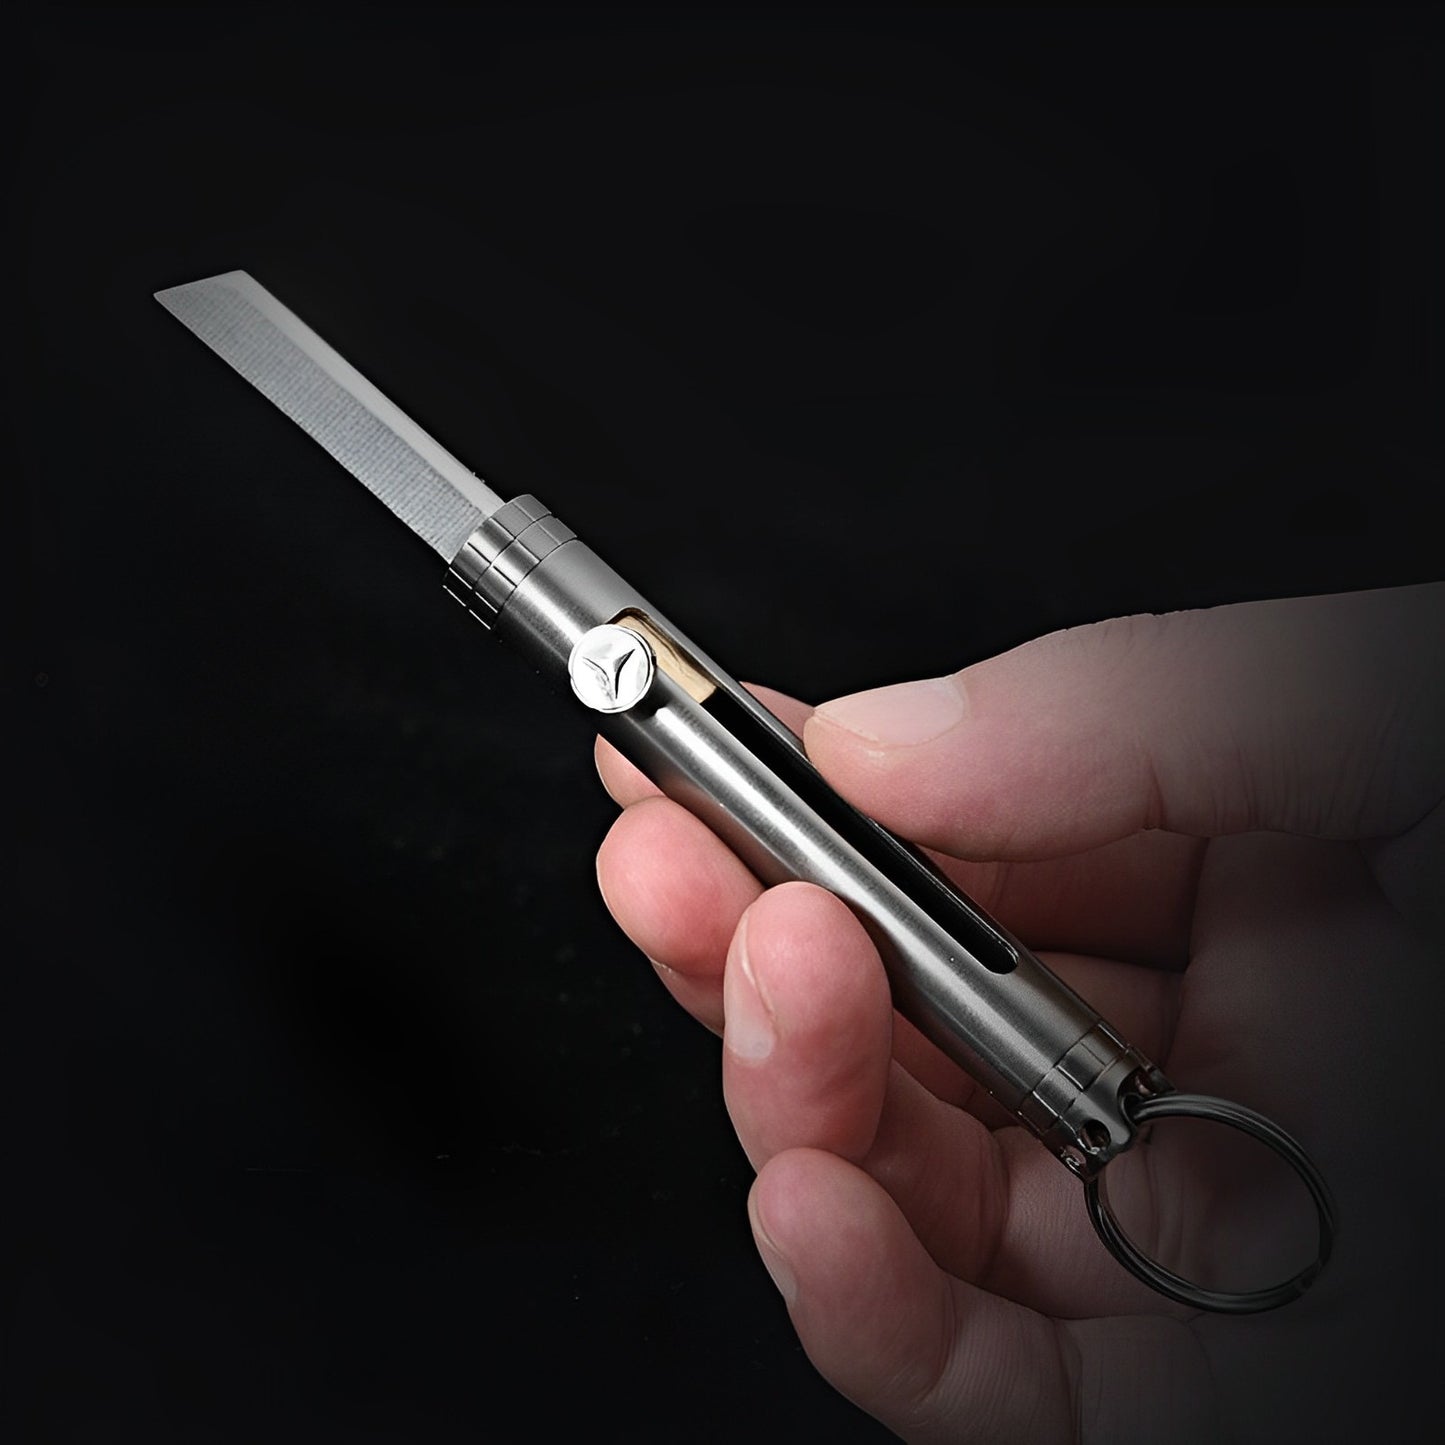  Juzpio Titanium Alloy Small Keychain Knife, Mini